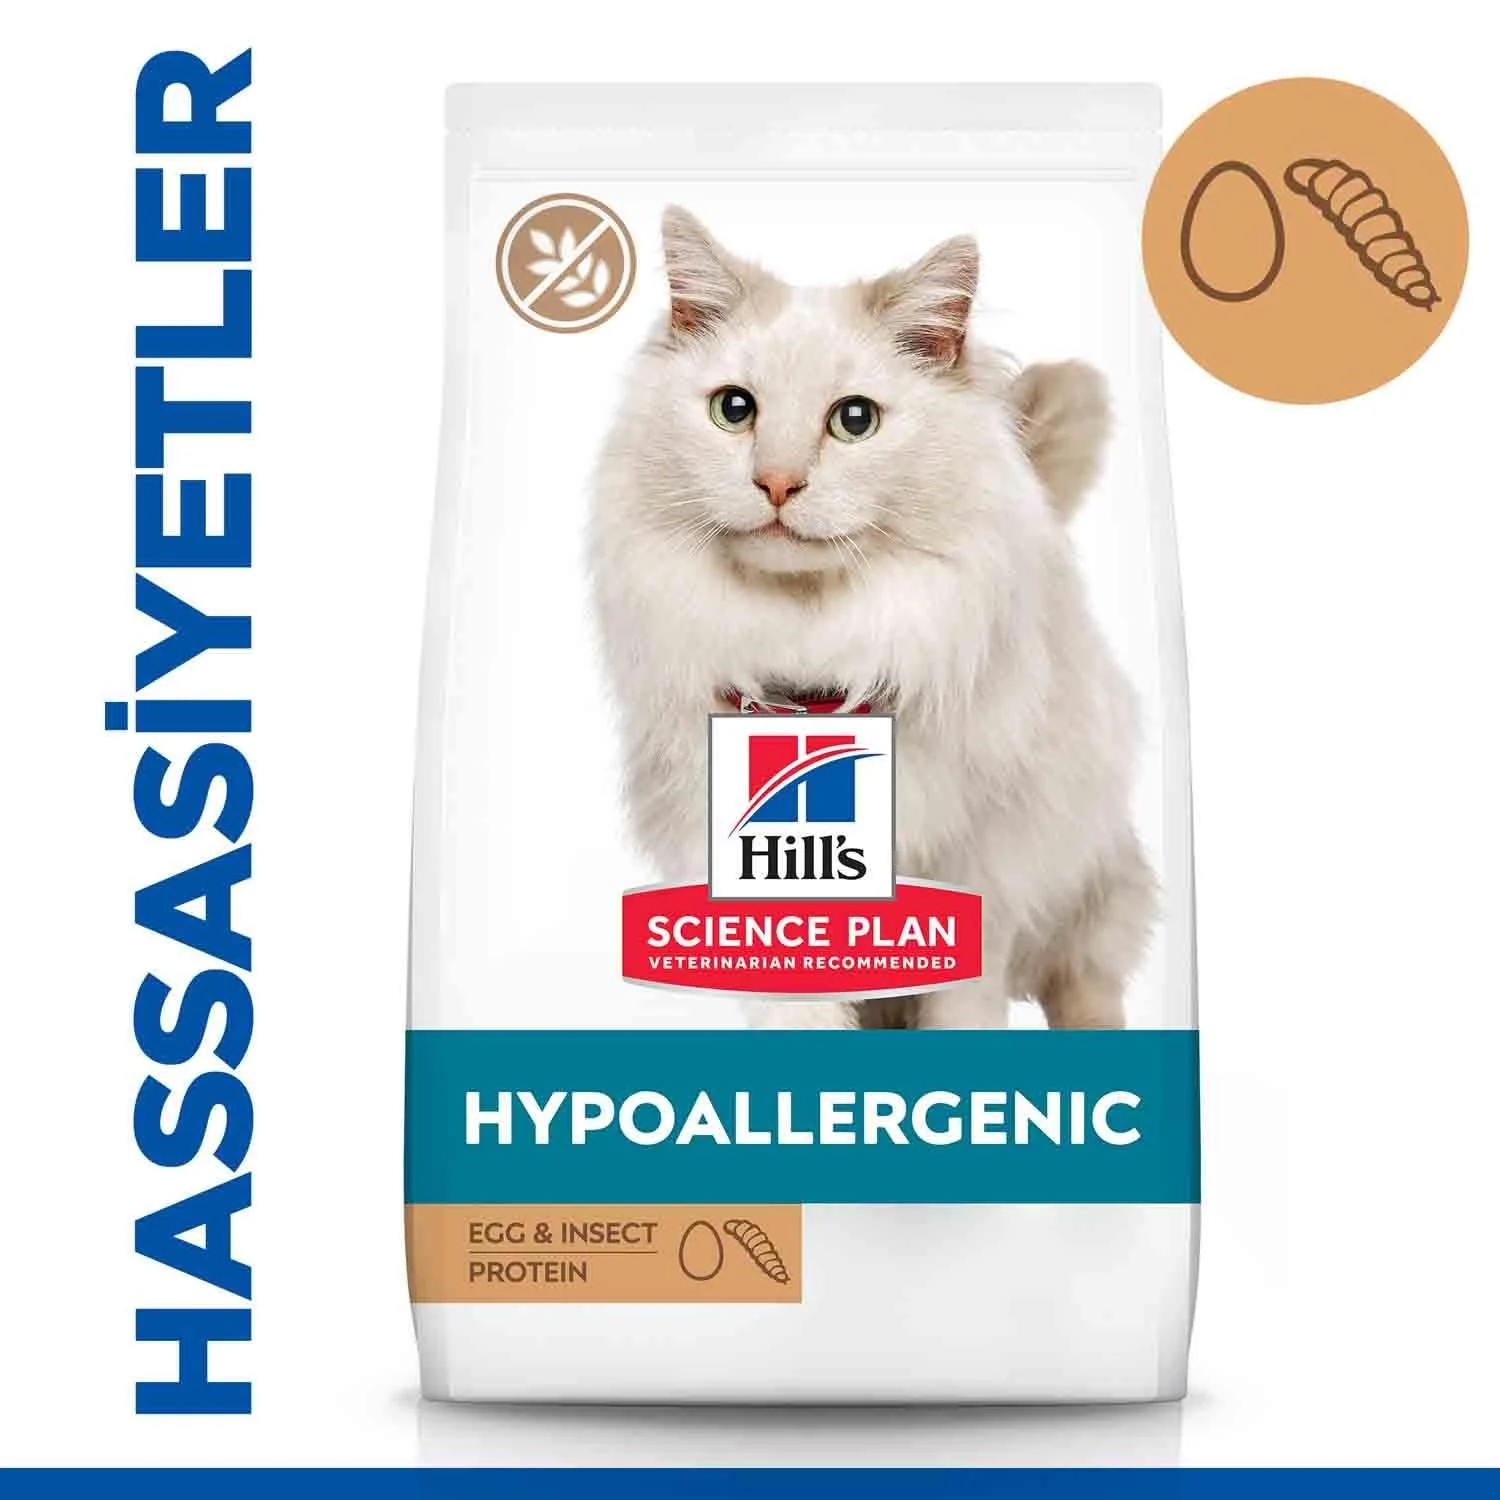 Hills Hypoallergenic Yumurta ve Böcek Proteinli Kedi Maması 7kg - Thumbnail